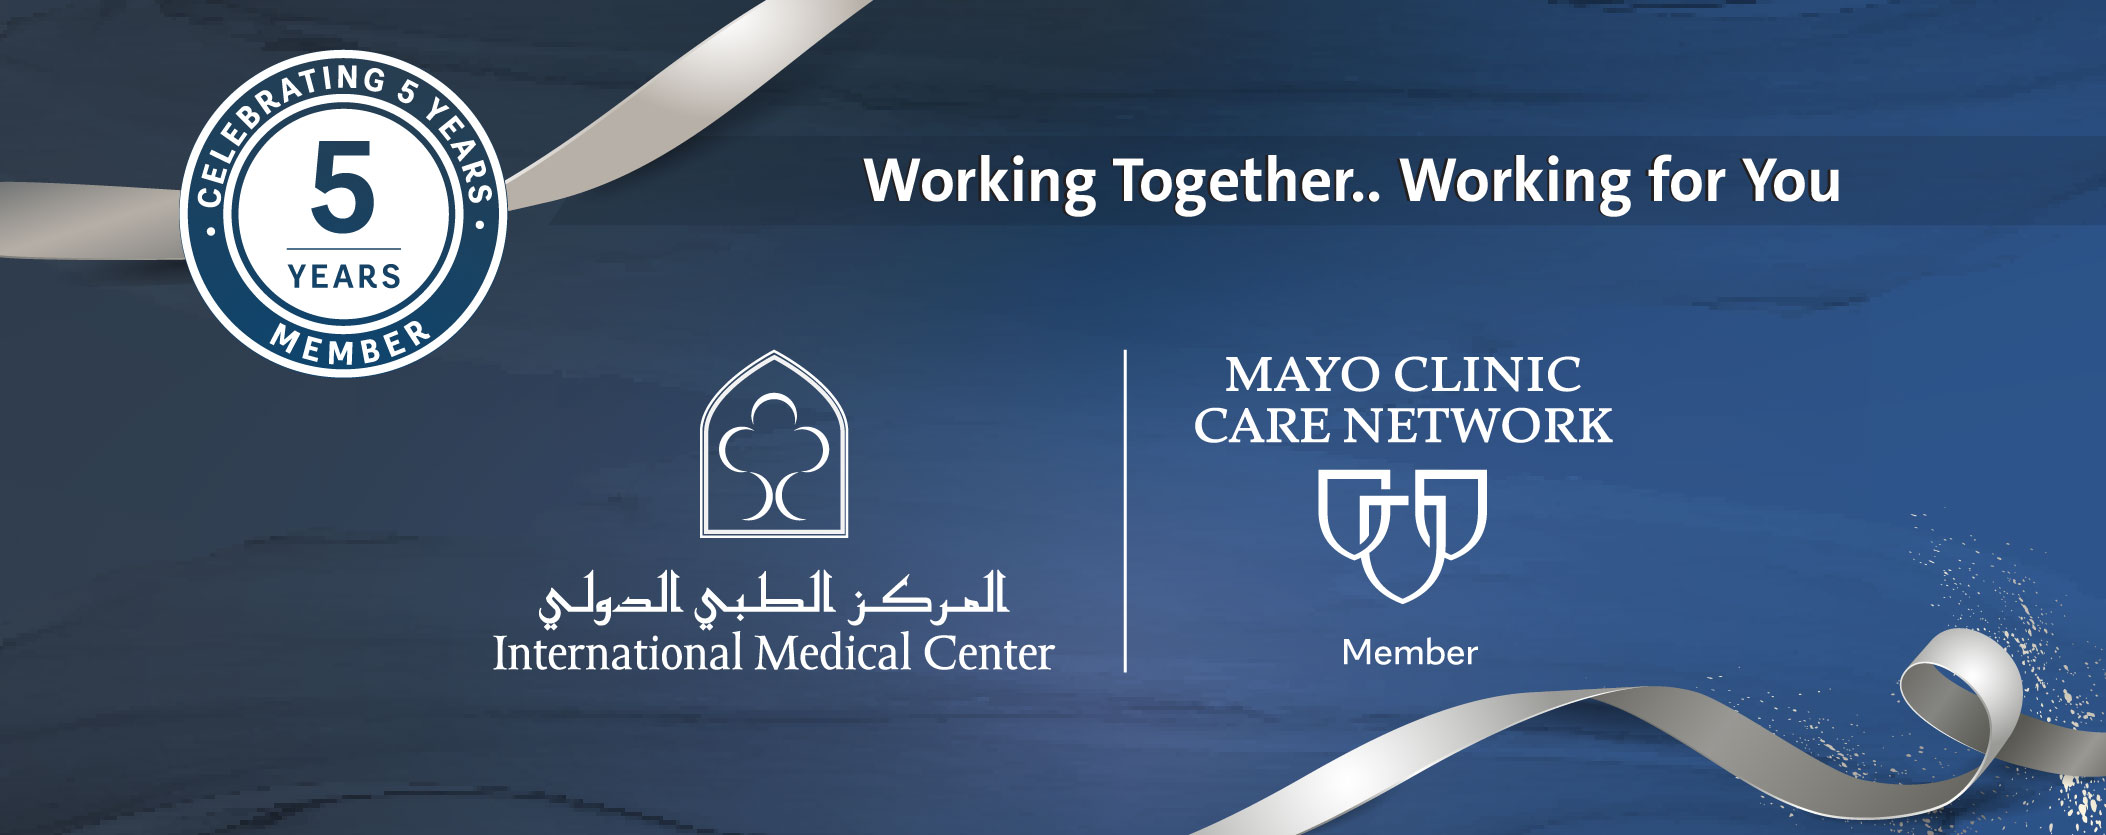 Mayo Clinic Network